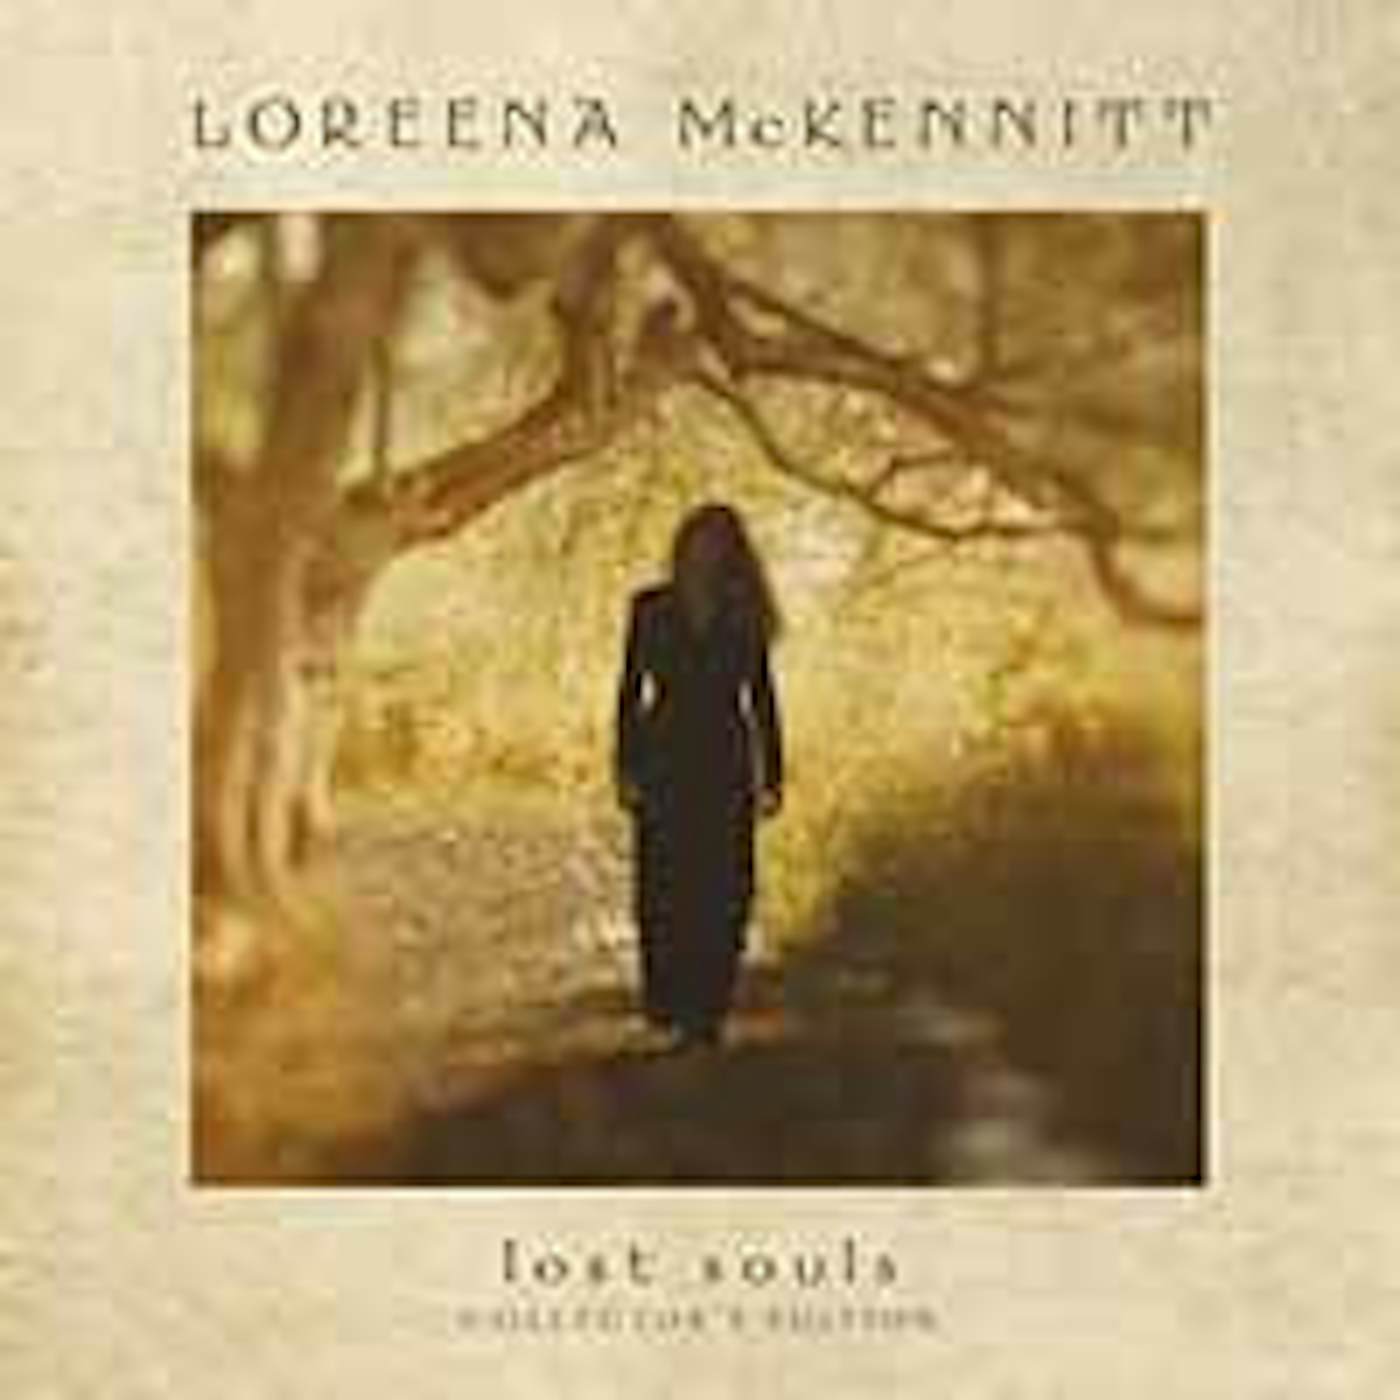 Loreena Mckennitt LP - Lost Souls - Collector's Edition (Lp+Cd)